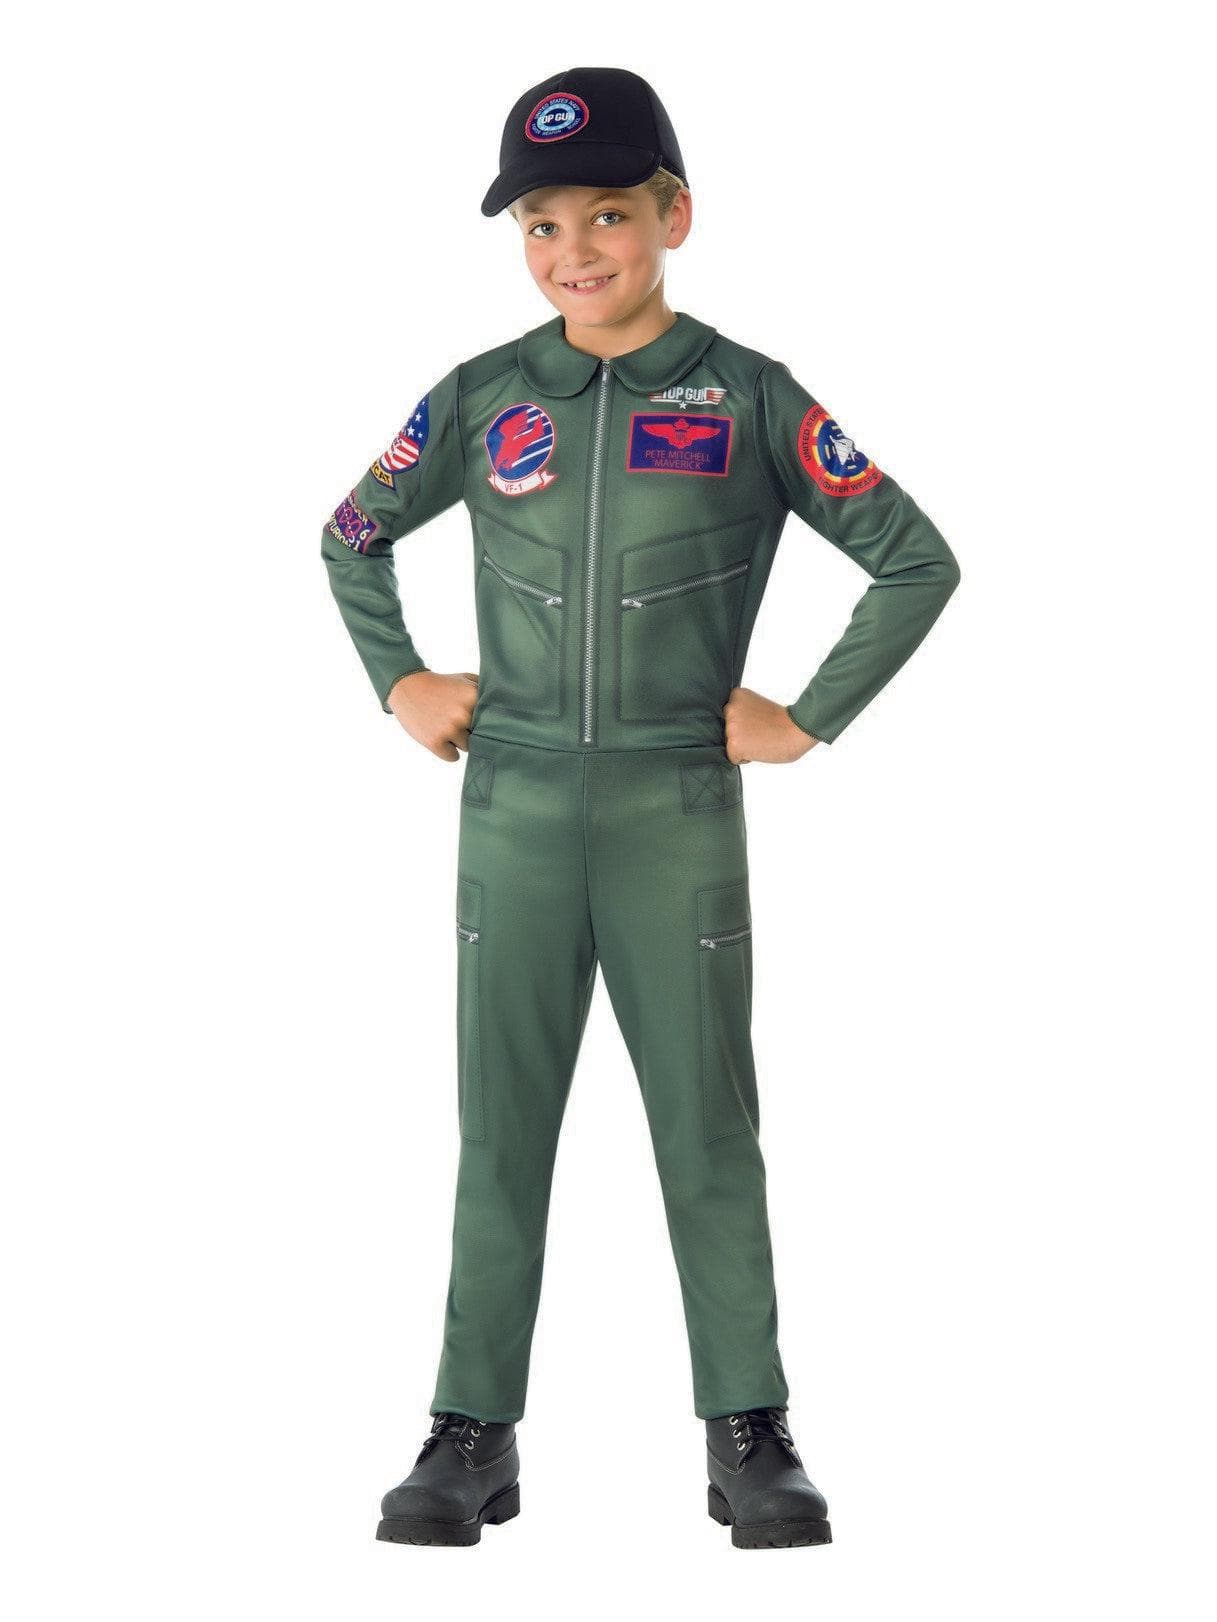 Kids Top Gun Costume - costumes.com